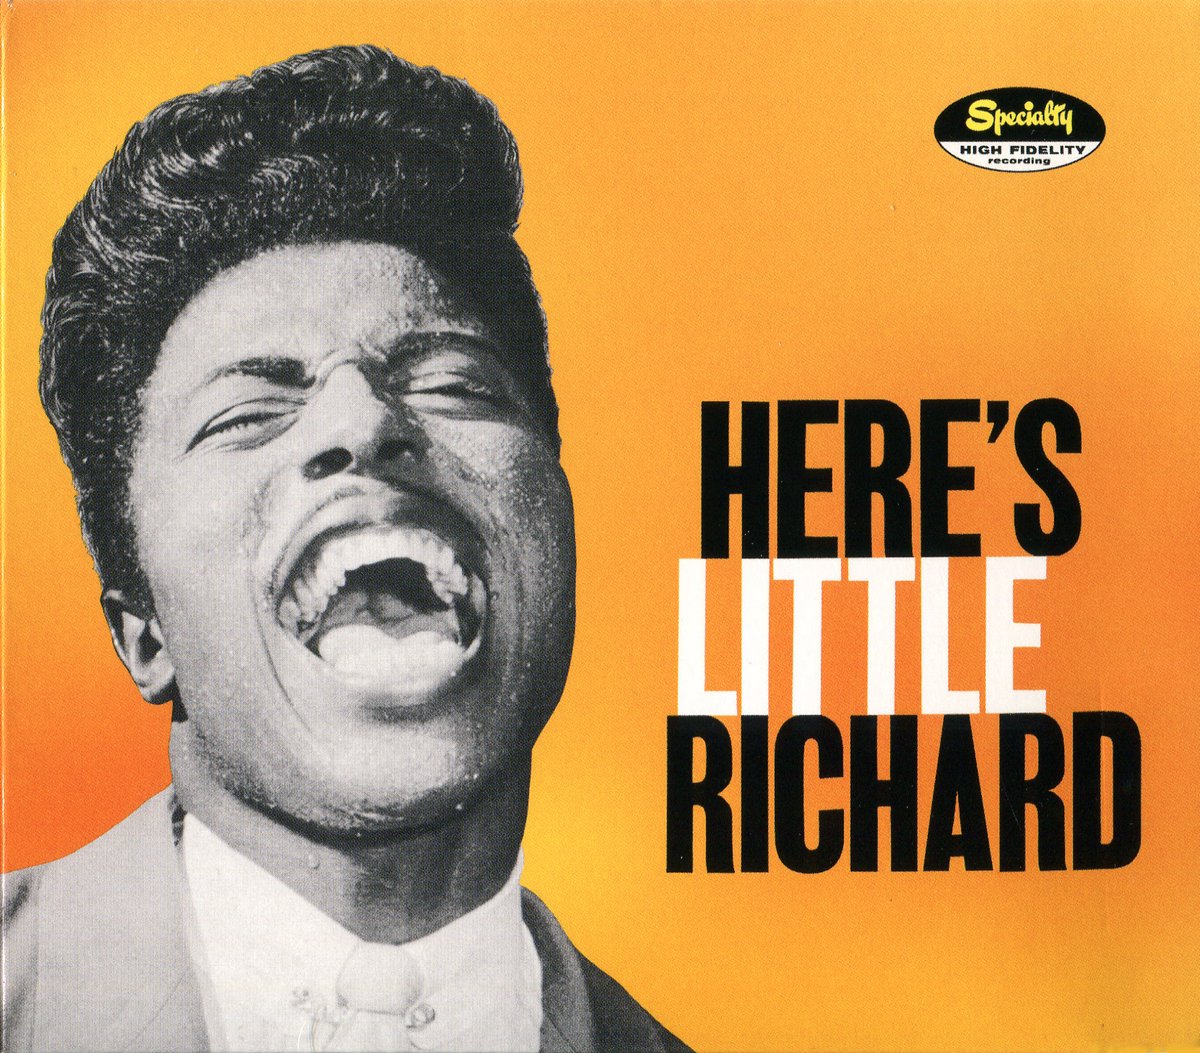 Little Richard - Here's Little Richard (1957) #RocknRoll #RhythmnBlues #NewOrleansRnB #Macon #USA 🇺🇸 #50s #1950s #Specialty